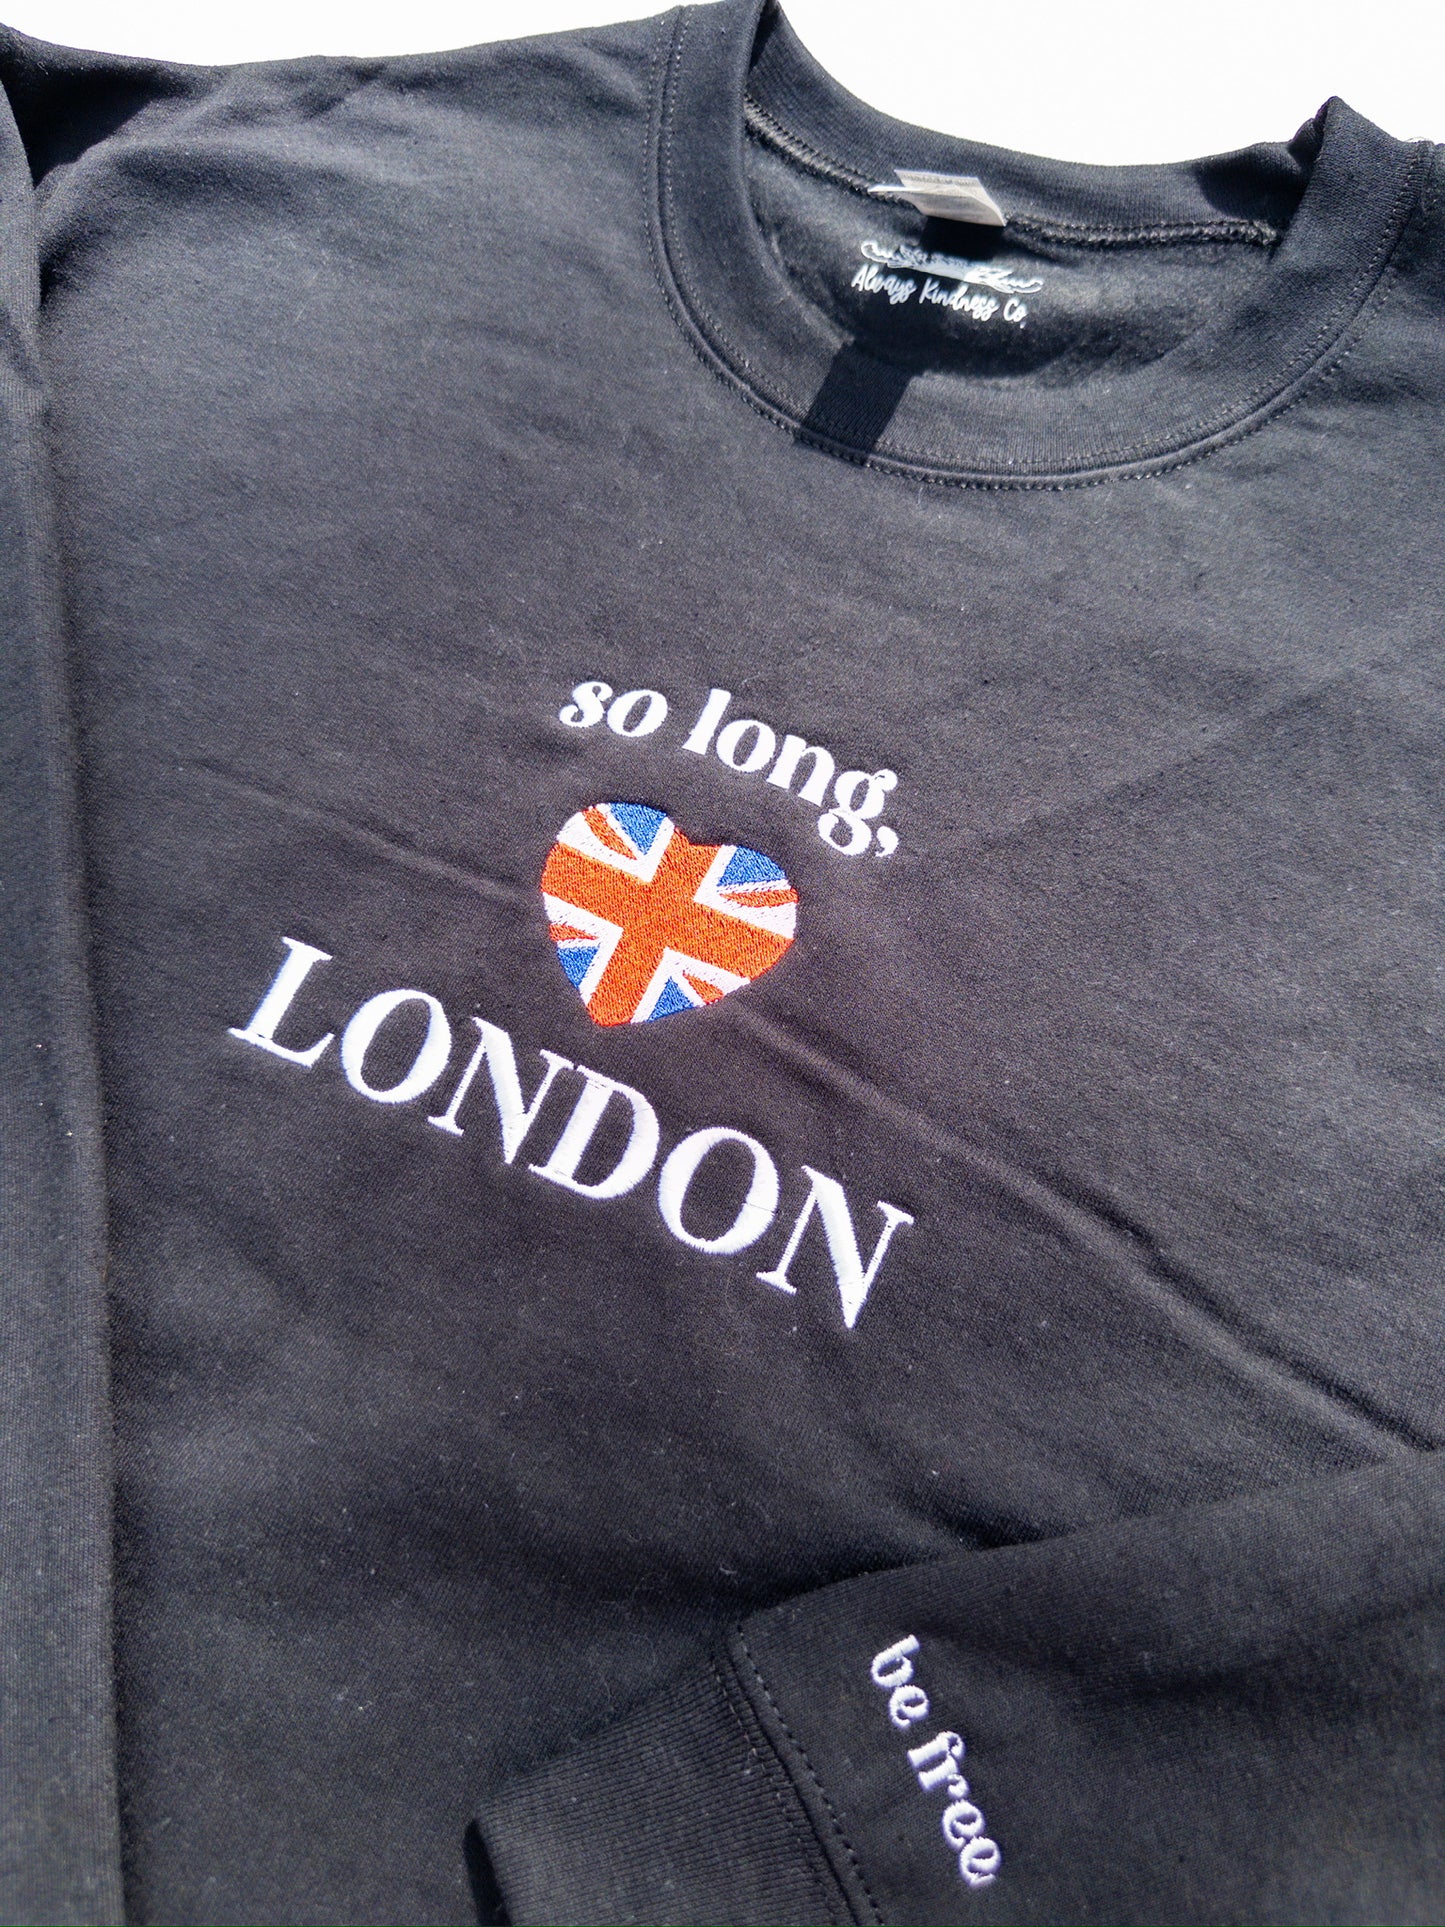 London ~ Embroidered Tee, Crewneck, Hoodie, and Tote bag